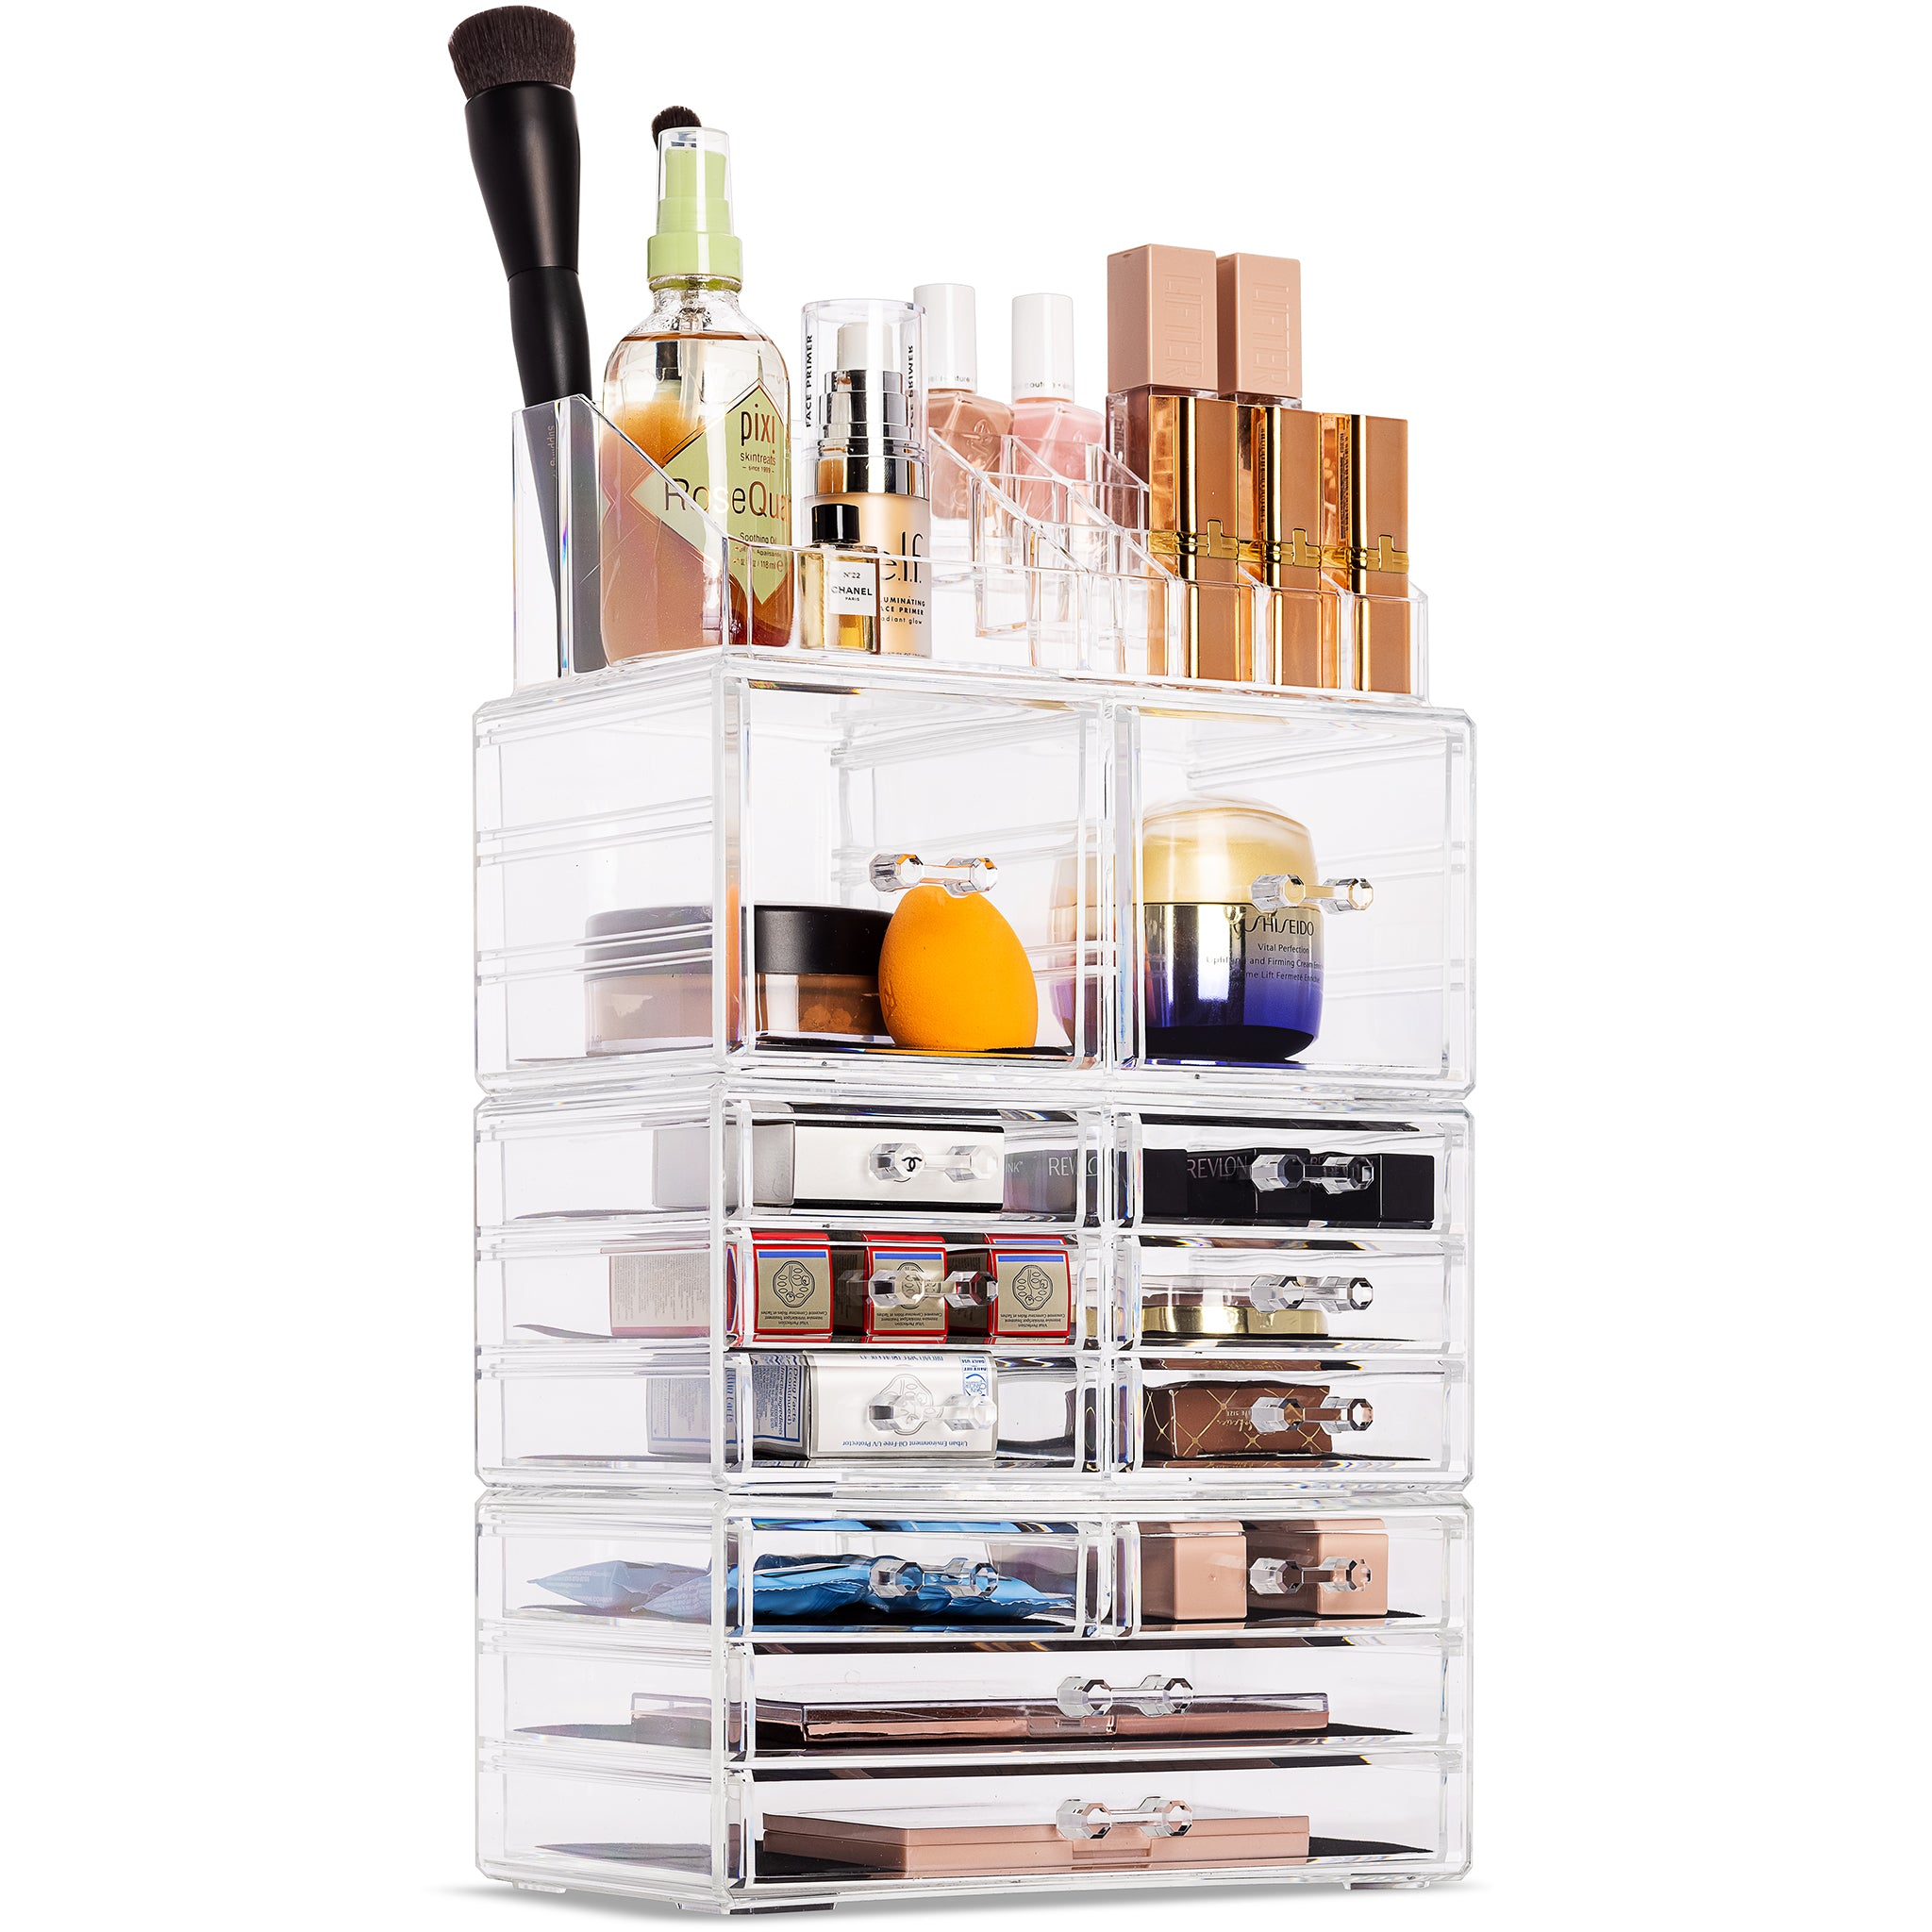 Small Drawer Organizer Desktop Storage Box Makeup Organizer Clear